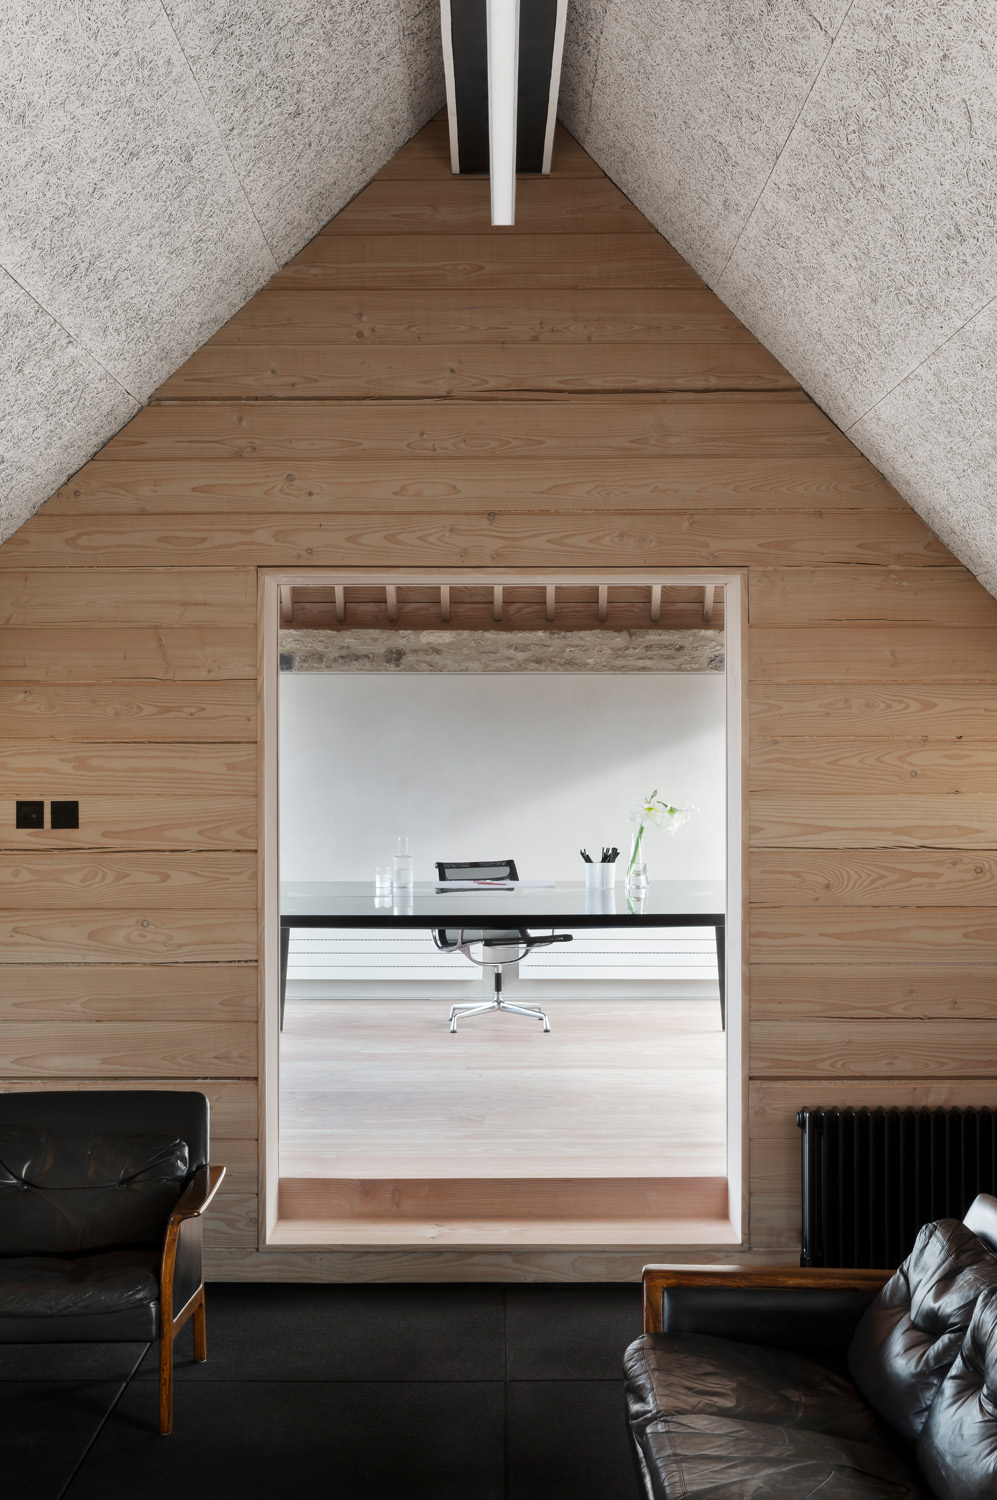 Living interios by Richard Parr Associates - contemporary architecture design studio in London